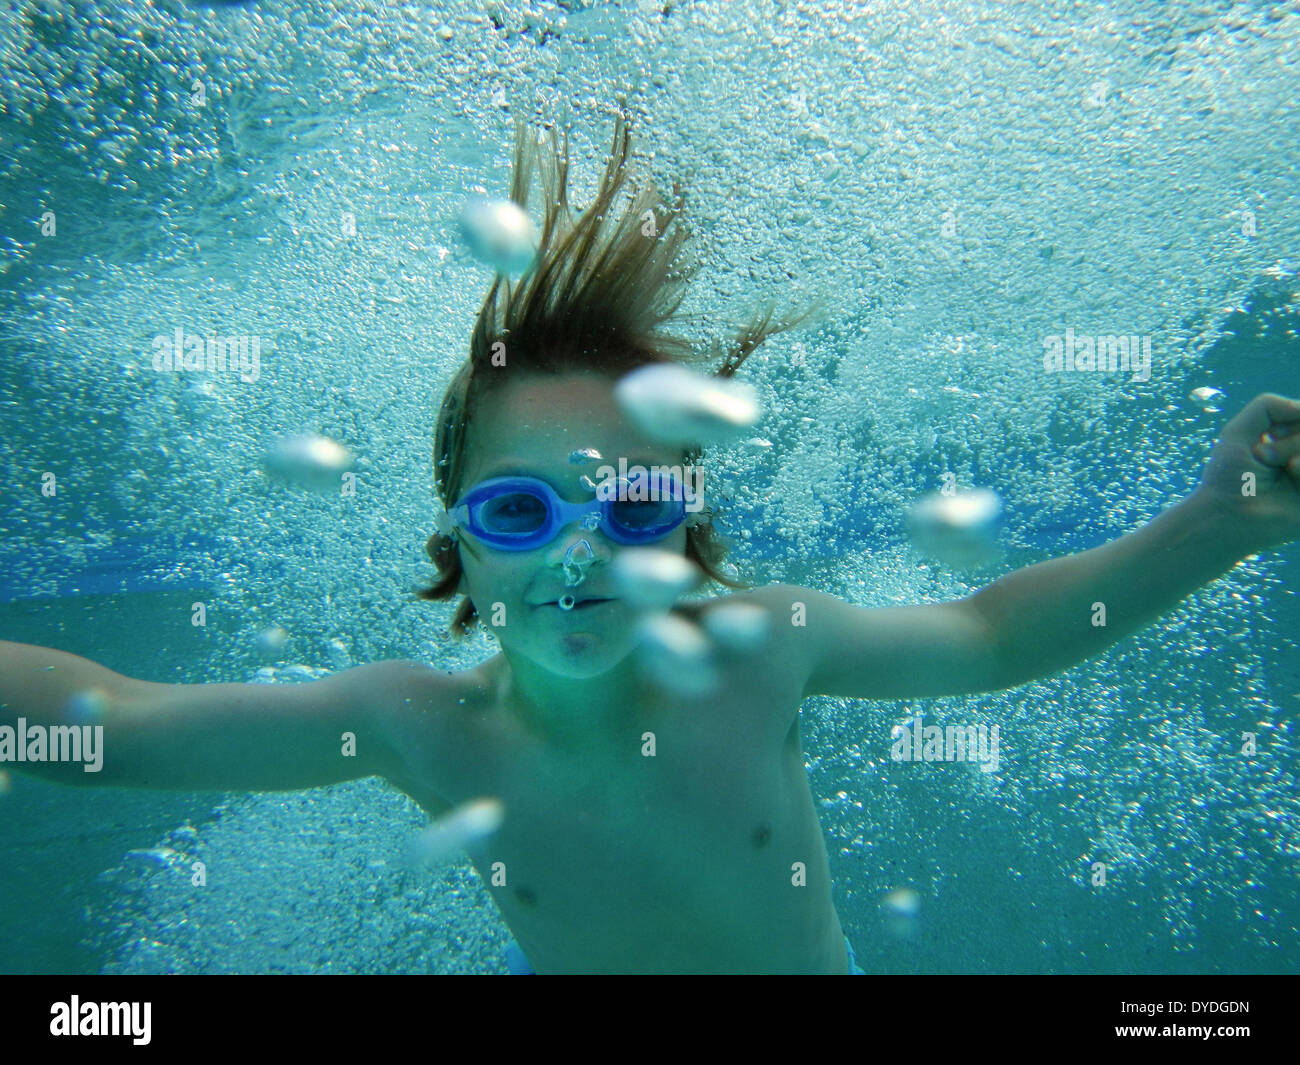 A boy swimming underwater. Stock Photo